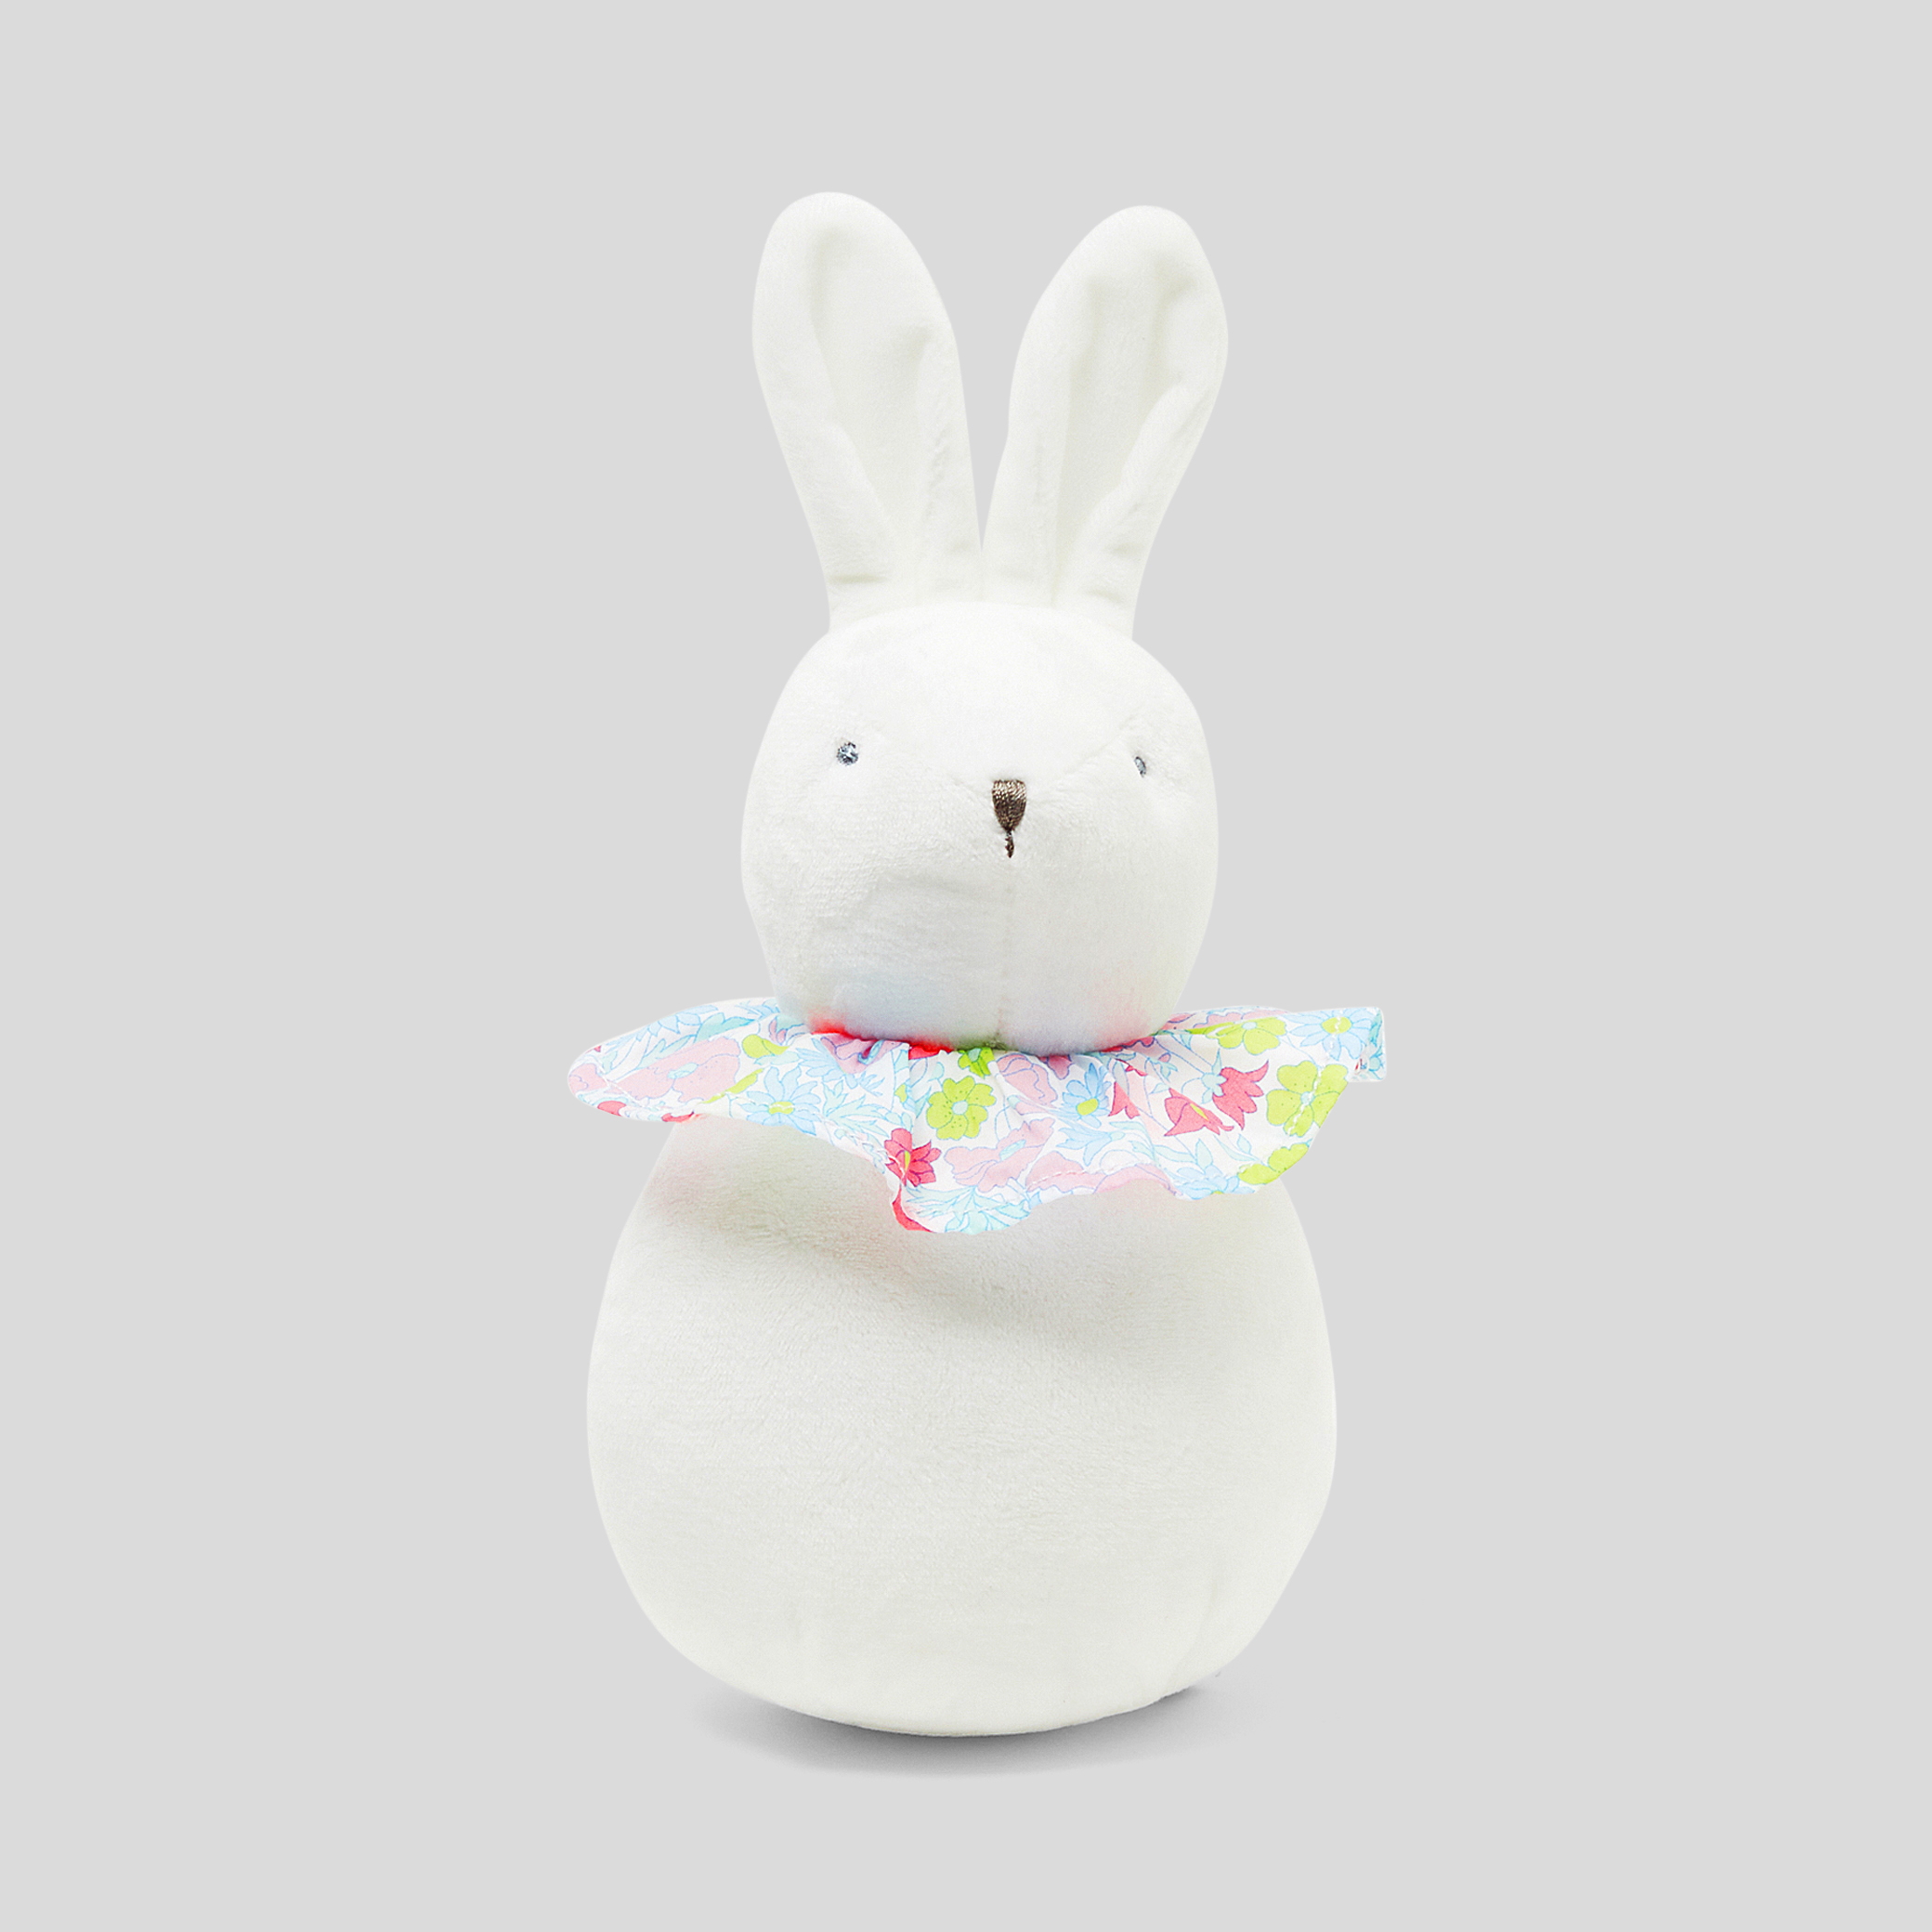 Musical rabbit plush toy